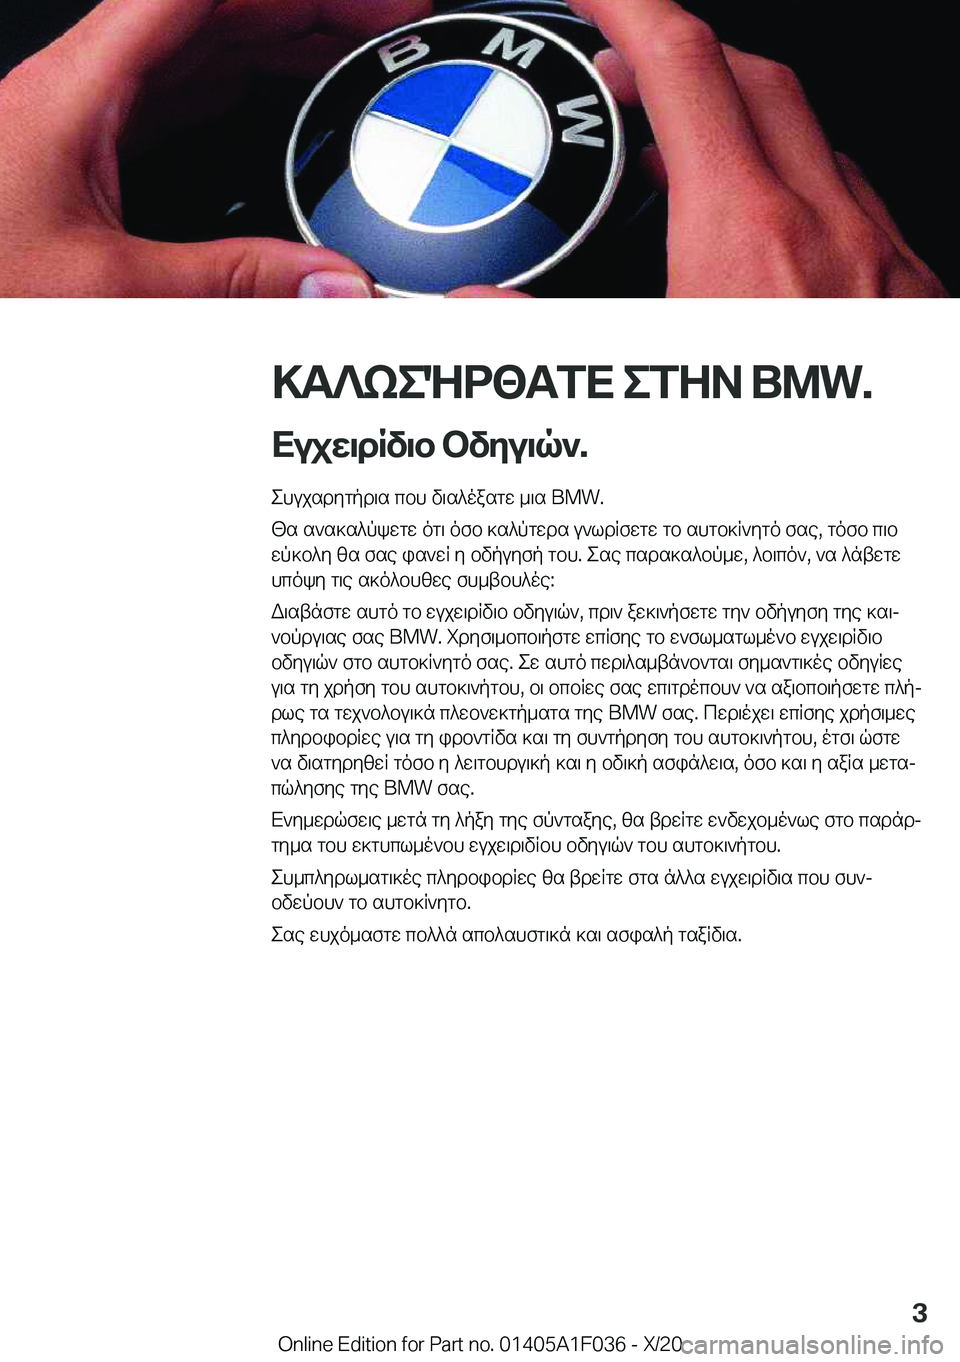 BMW X1 2021  ΟΔΗΓΌΣ ΧΡΉΣΗΣ (in Greek) >T?keNd<TfX�efZA��B�M�W�.
Xujw\dRv\b�bvyu\q`�. ehujsdygpd\s�cbh�v\s^oasgw�_\s��B�M�W�.
<s�s`s]s^pkwgw�og\�ofb�